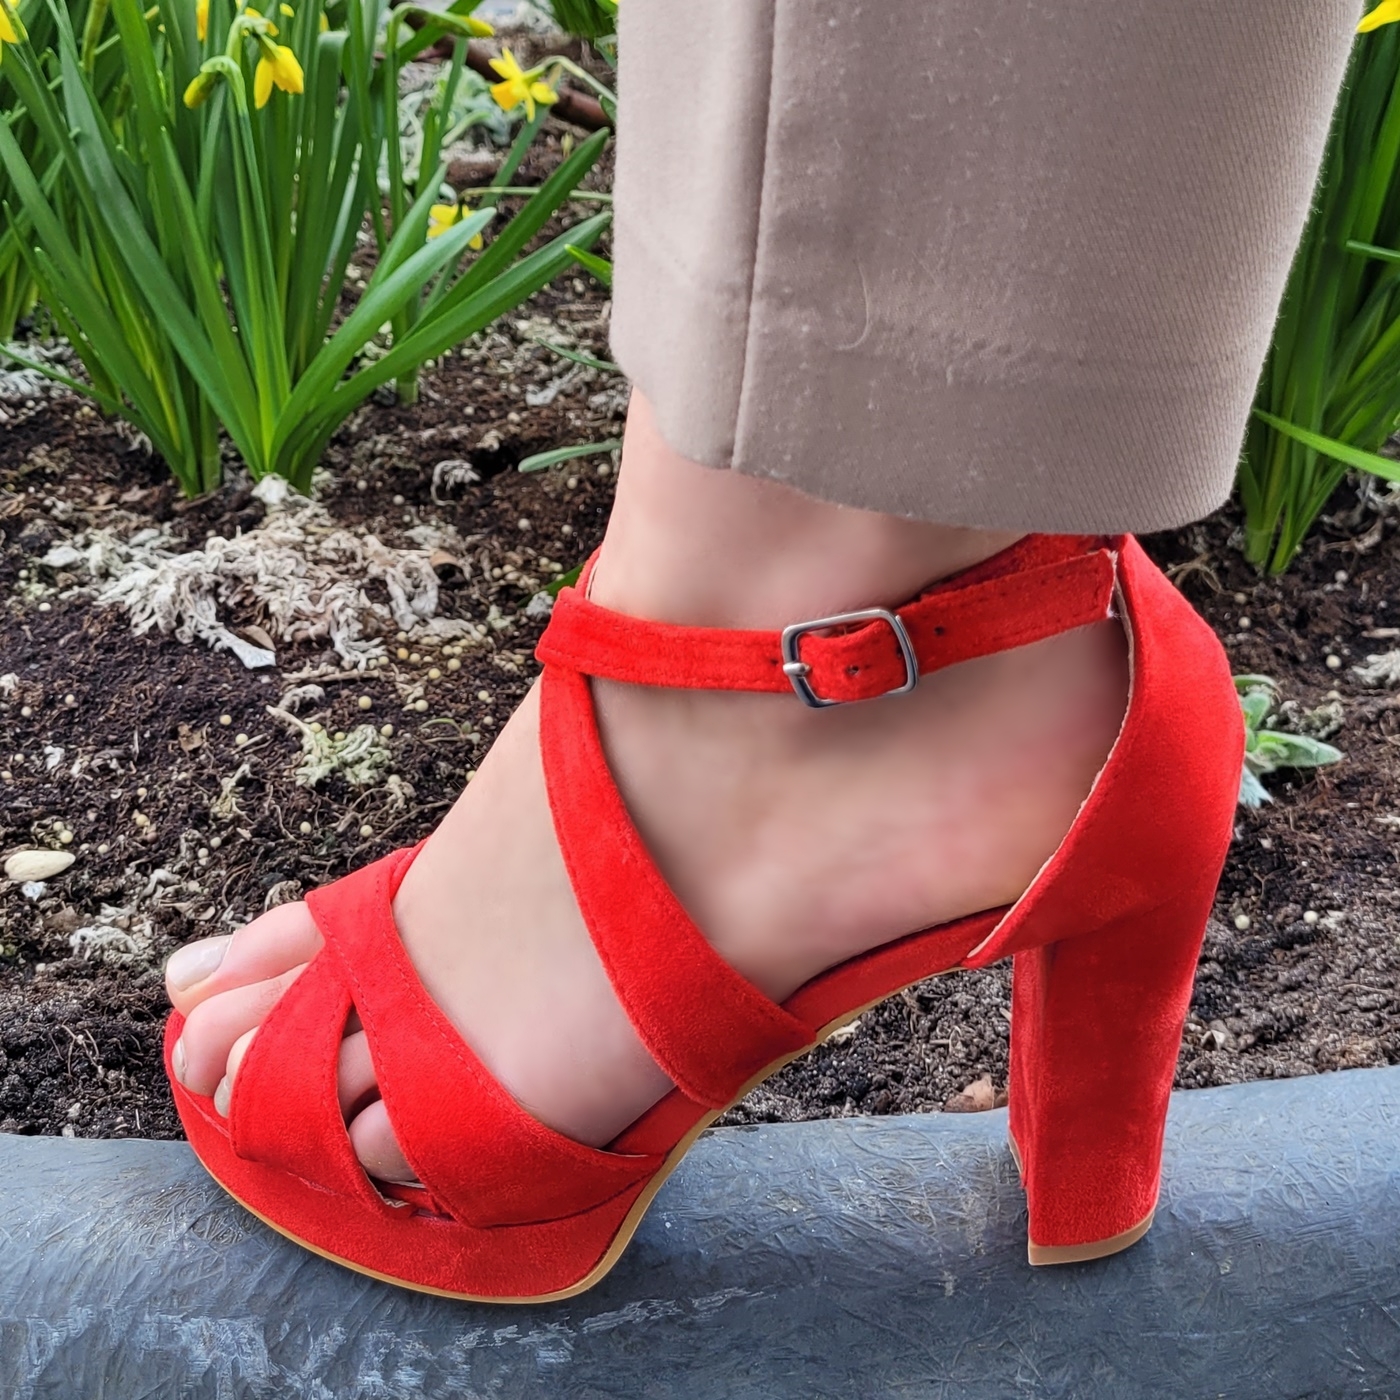 Rode sandalen met kruisbanden | Rode blokhaksandalen met gekruiste banden